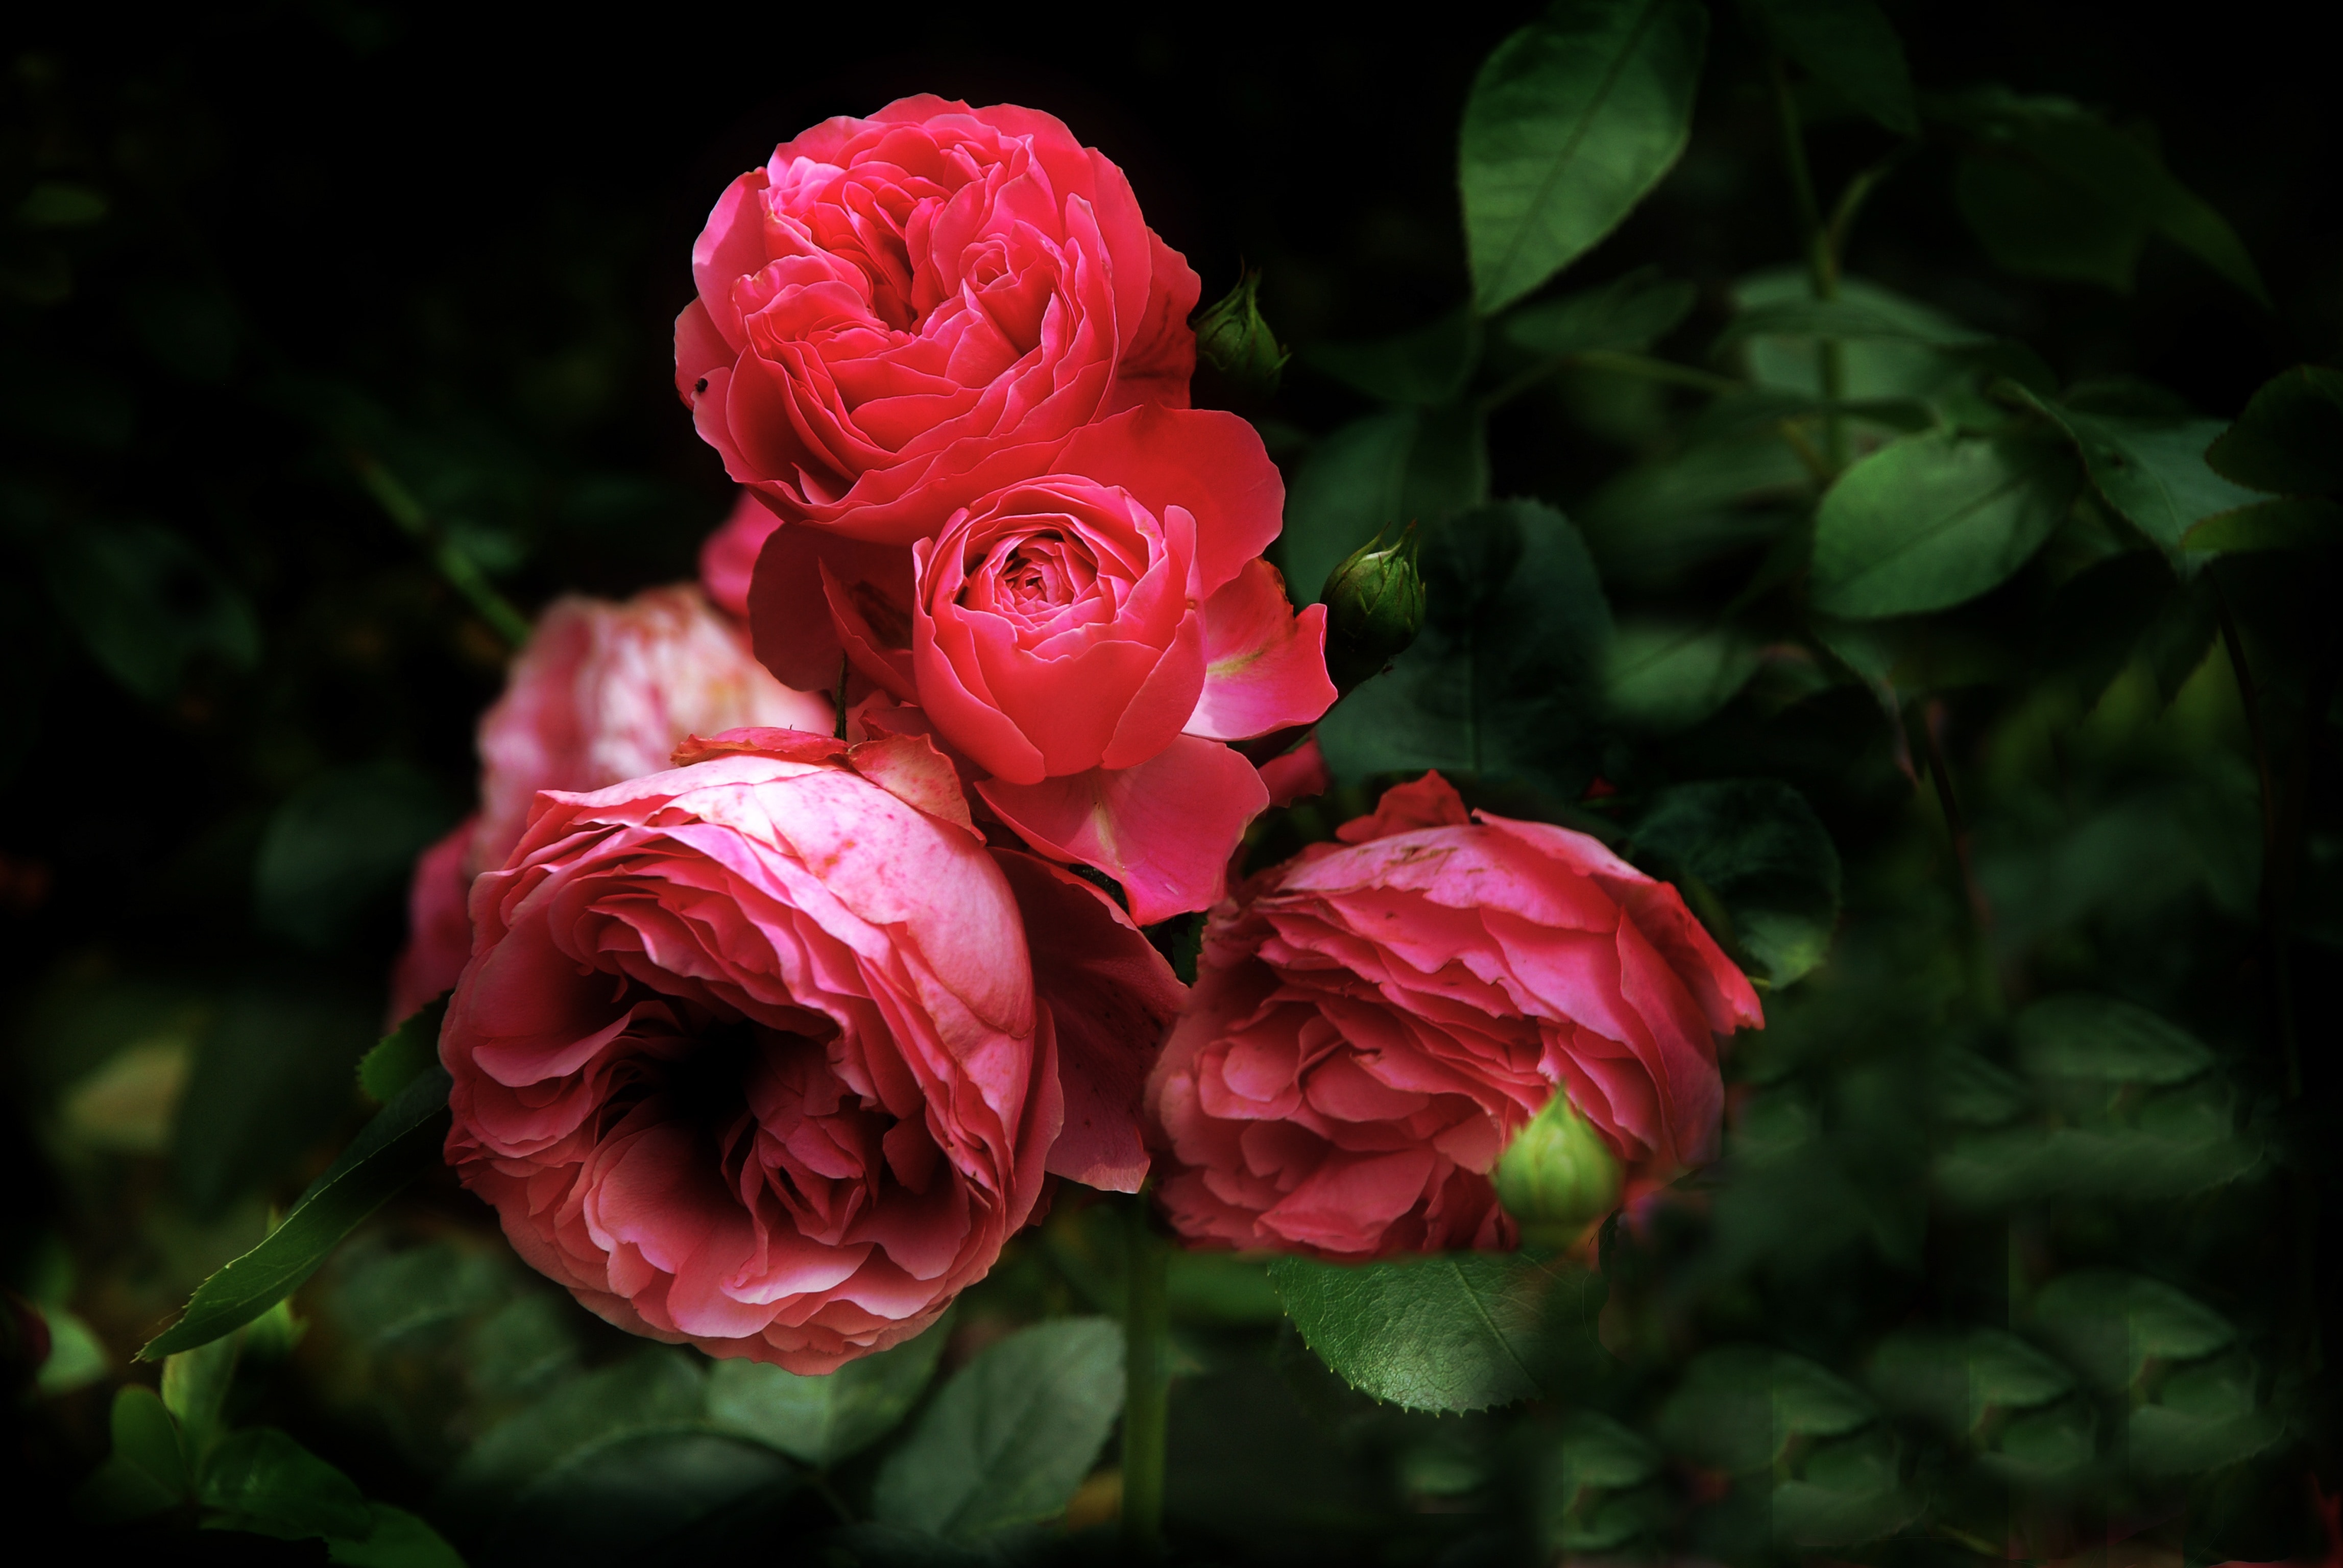 Rose, Leonardo, Da Vinci, flower, nature